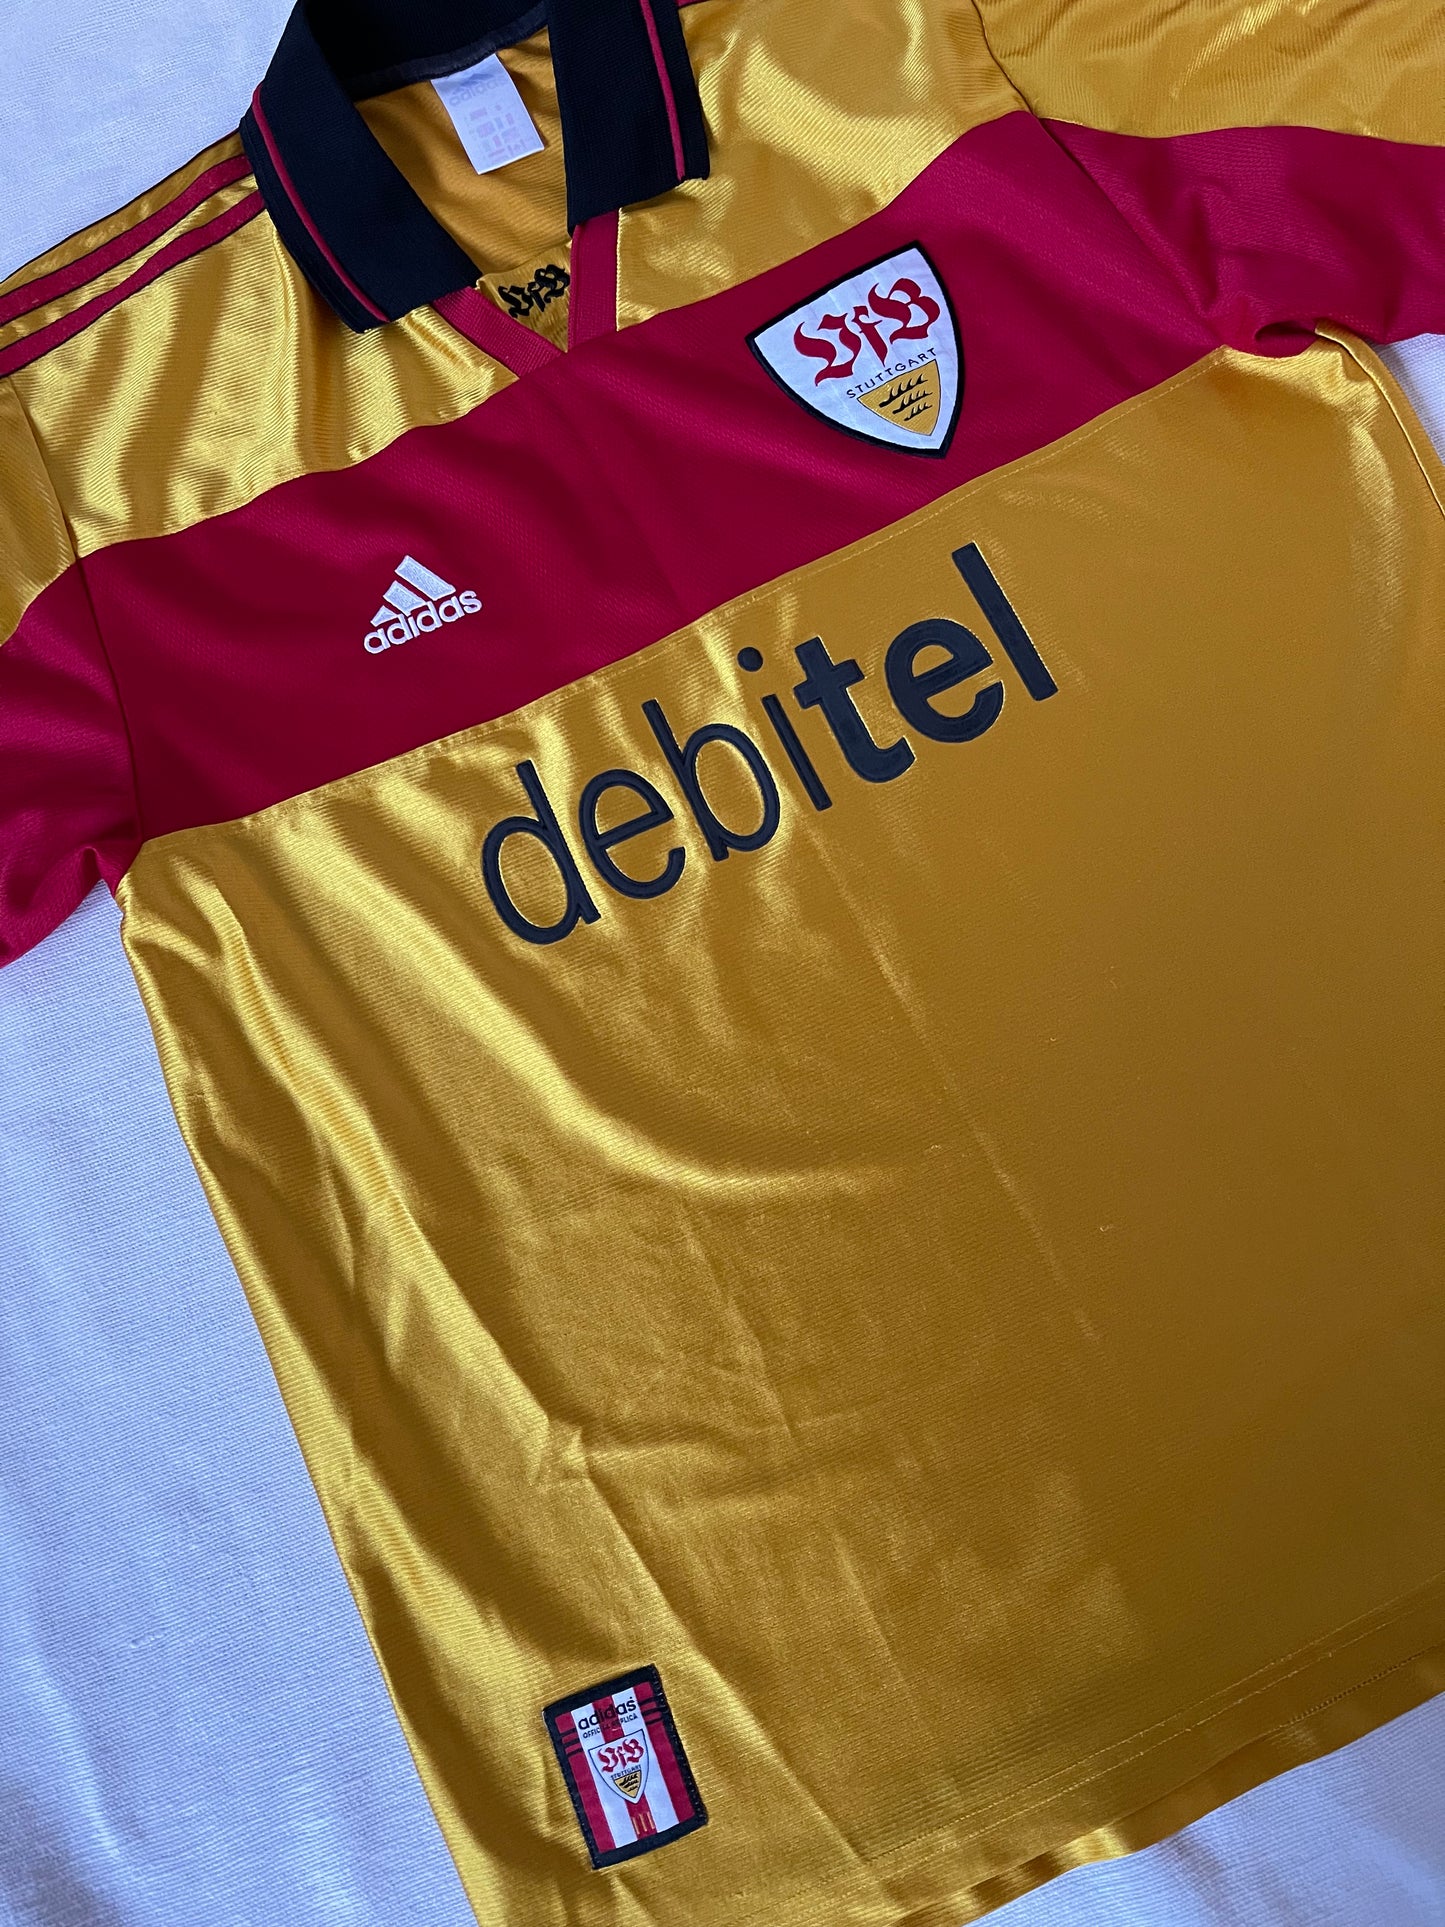 VFB Stuttgart Adidas 1999-2000 Away Third Football Shirt Shiny Golden Red Debitel Size L Climalite